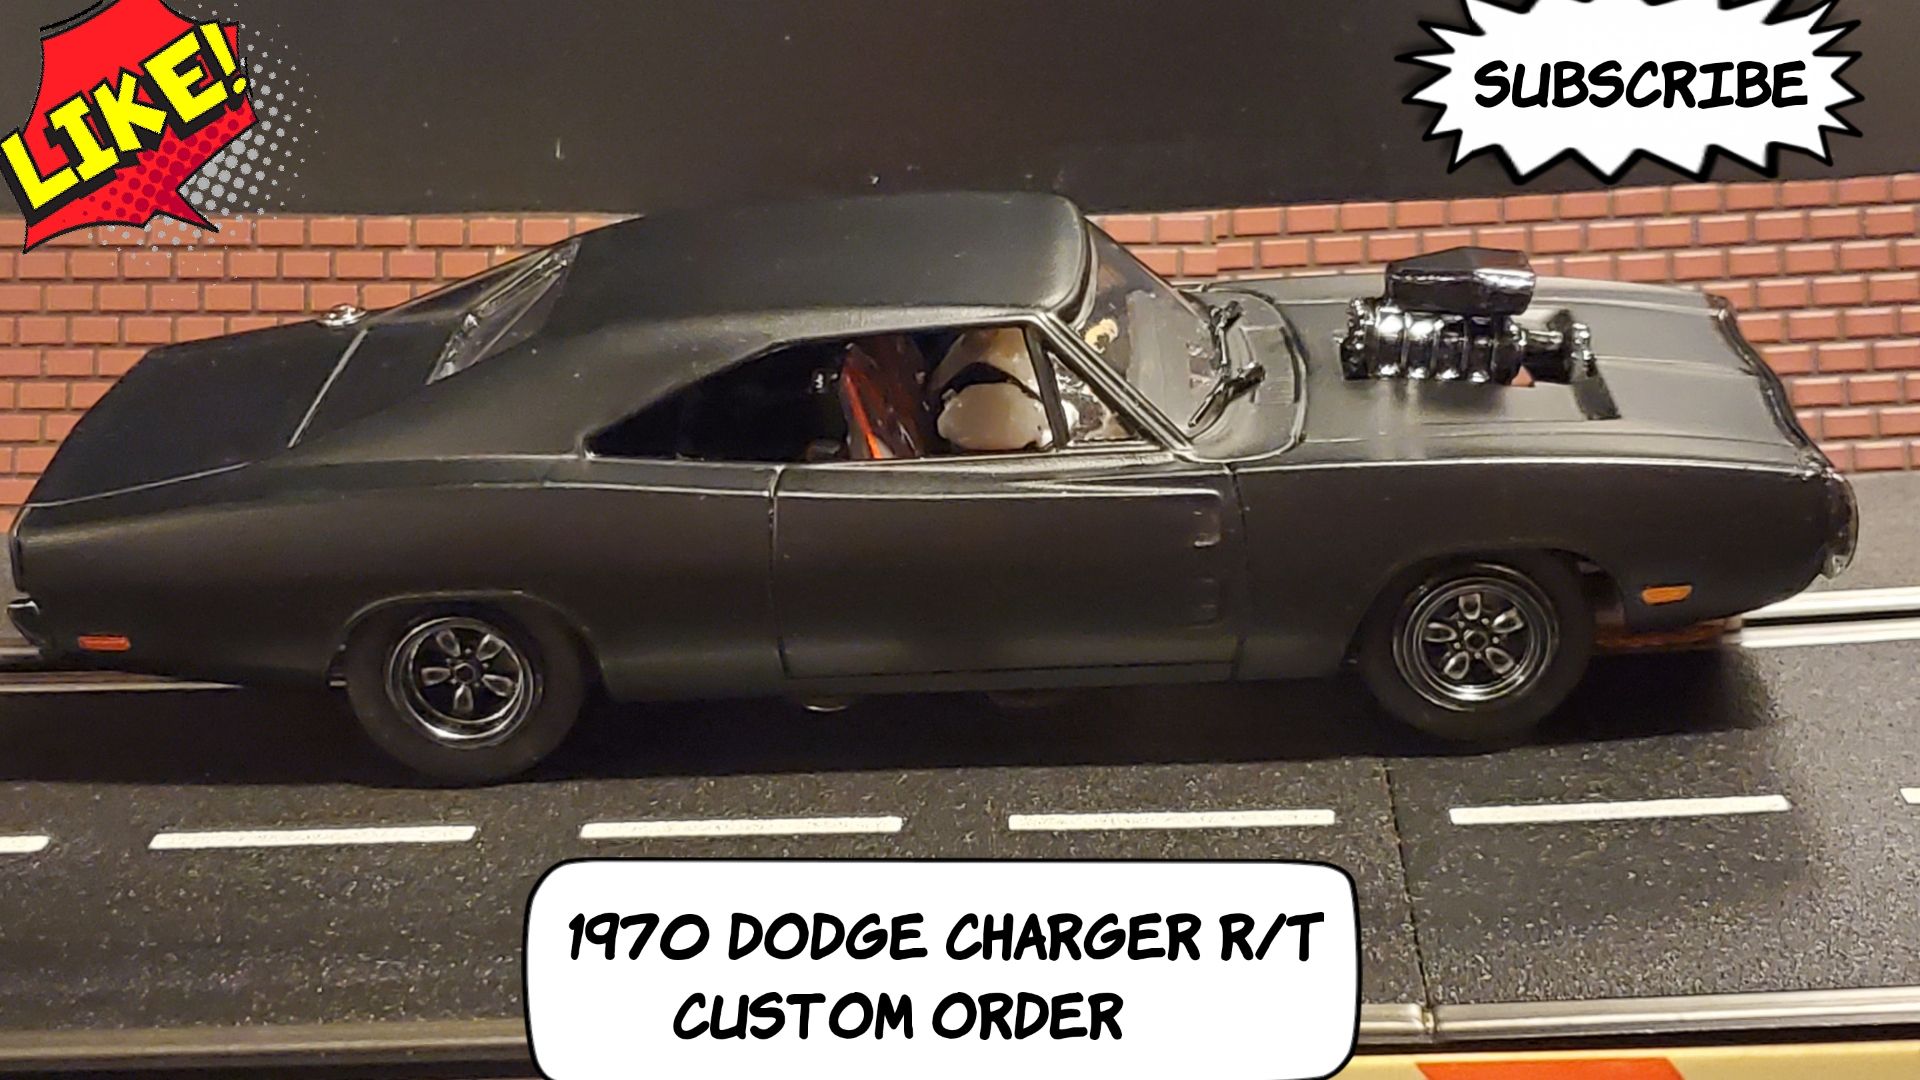 *** PAID - Custom Order *** - For David V. - 1970 Dodge Charger R/T Slot Car 1:24 Scale – Flat Black Custom Build for David Vena     